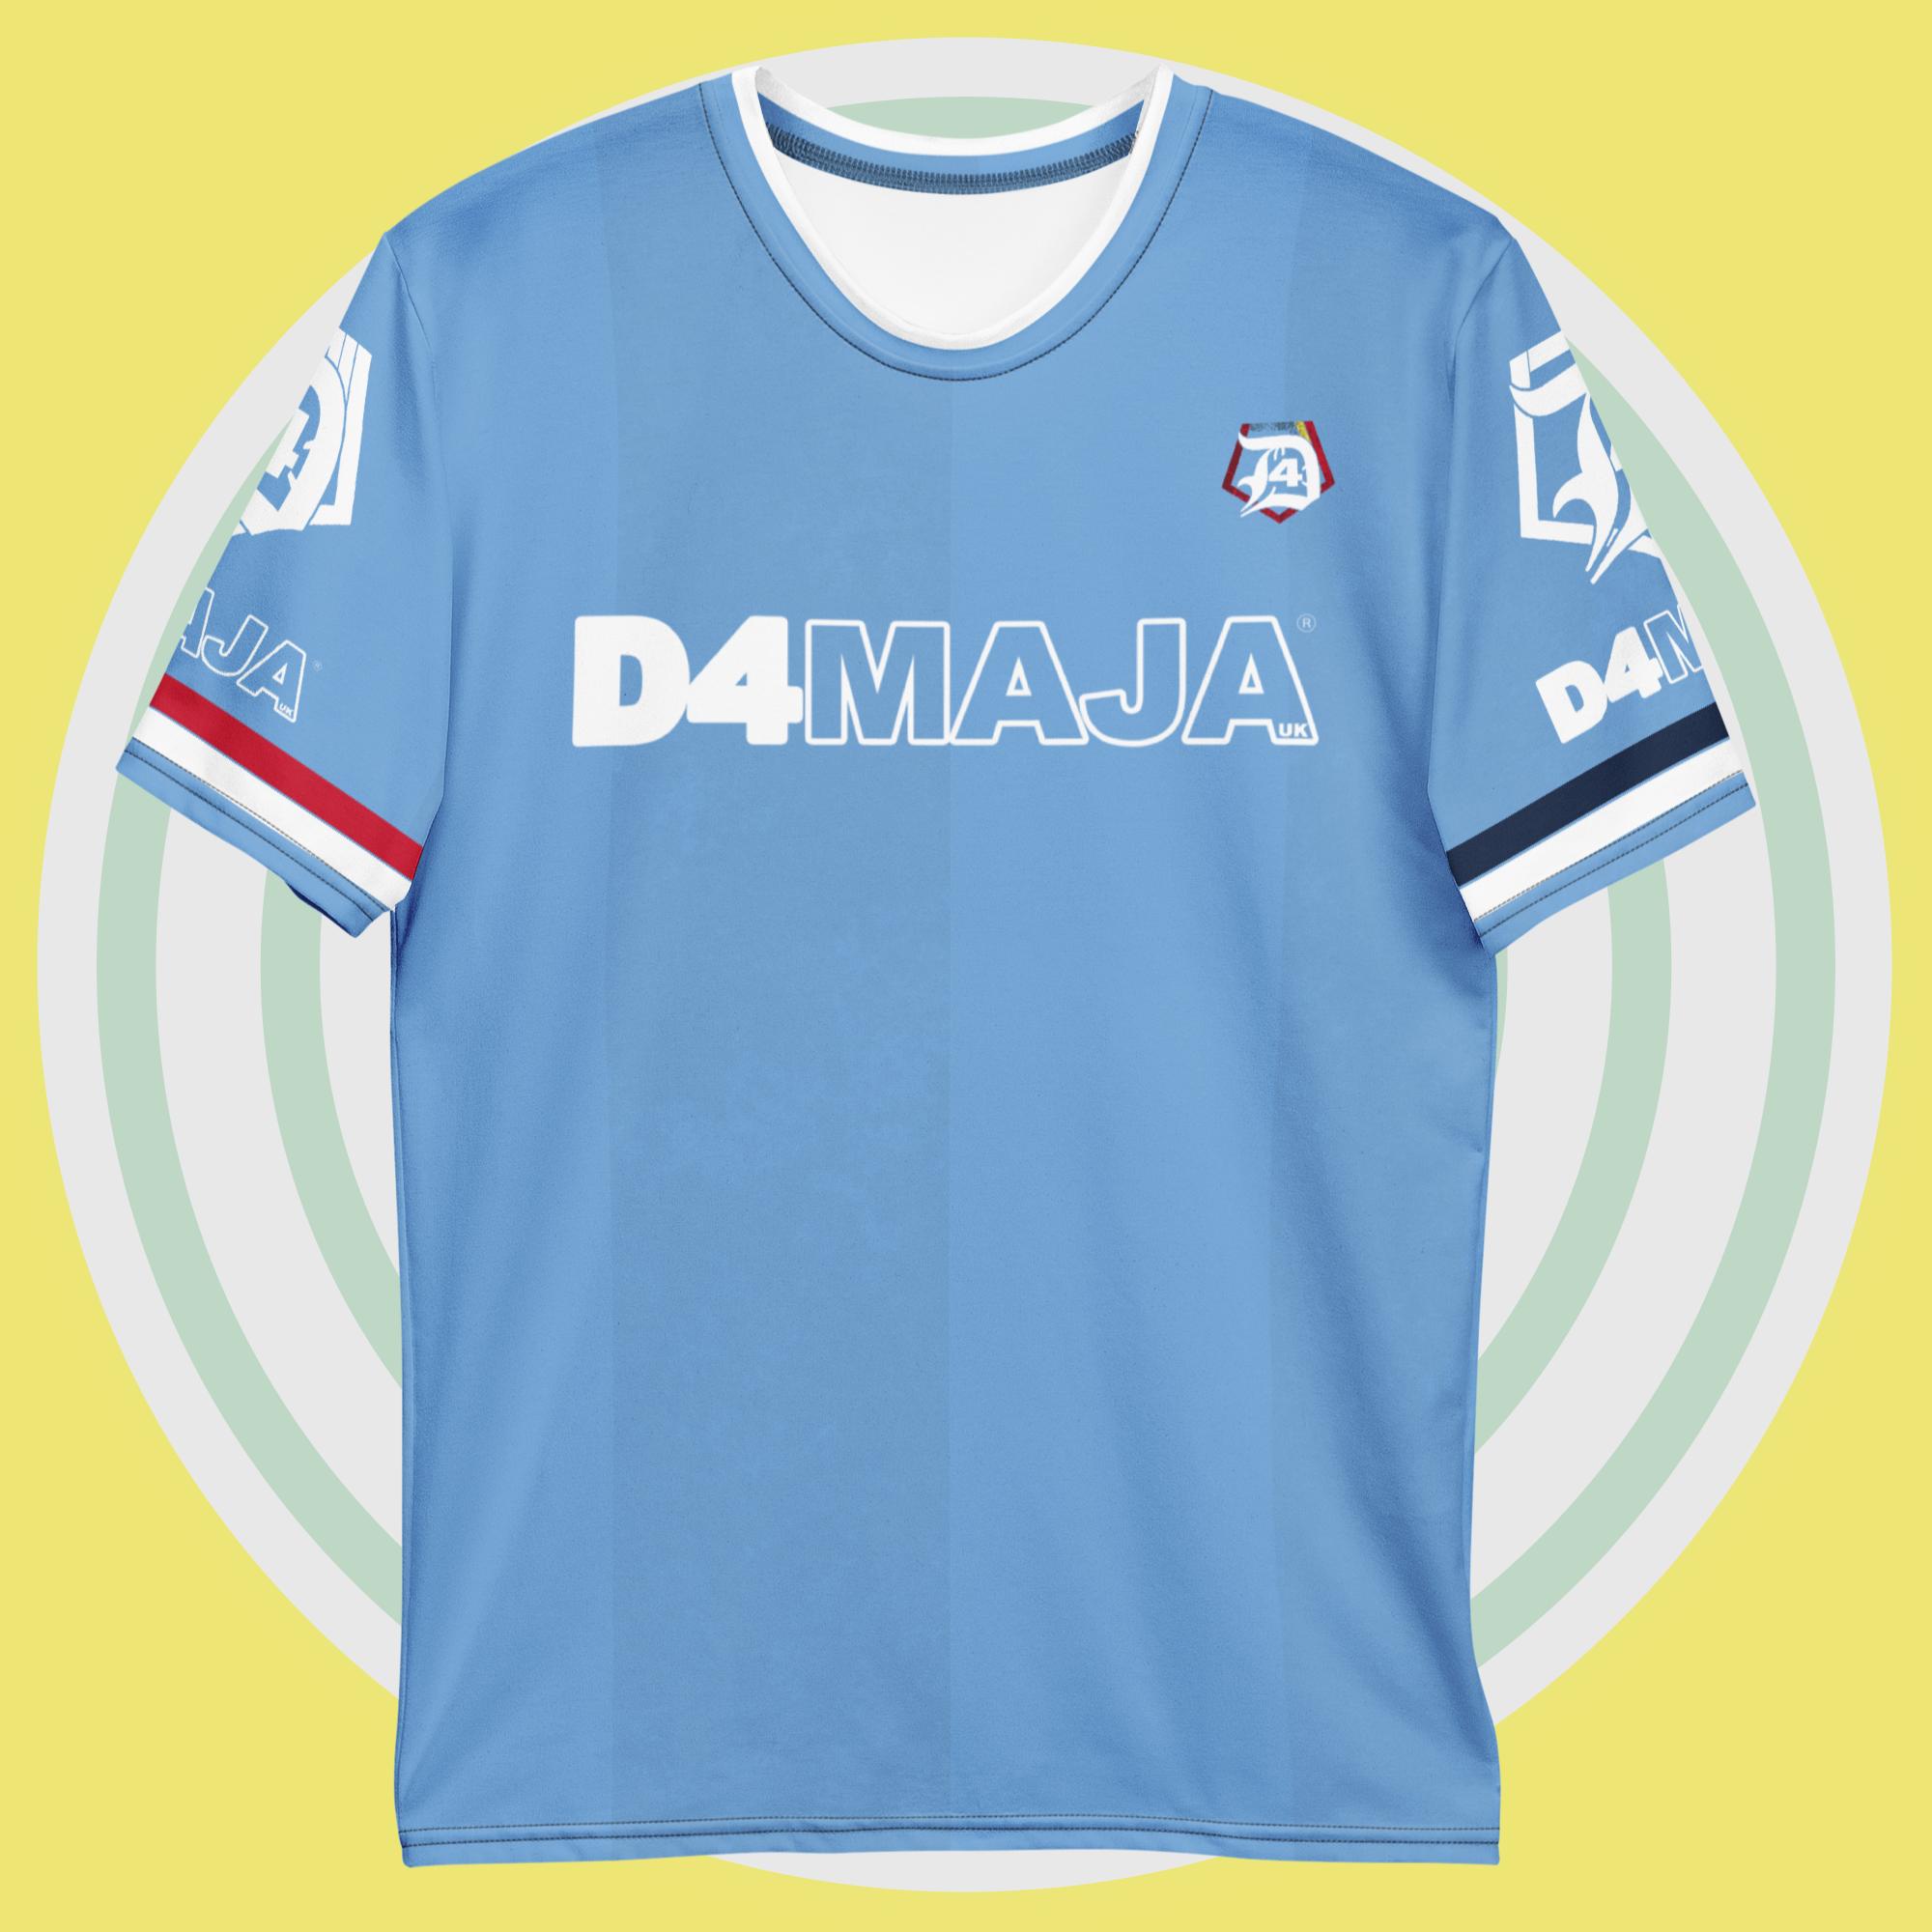 Sky blue Nostalgia t-shirt with Cyrile Regis image on back